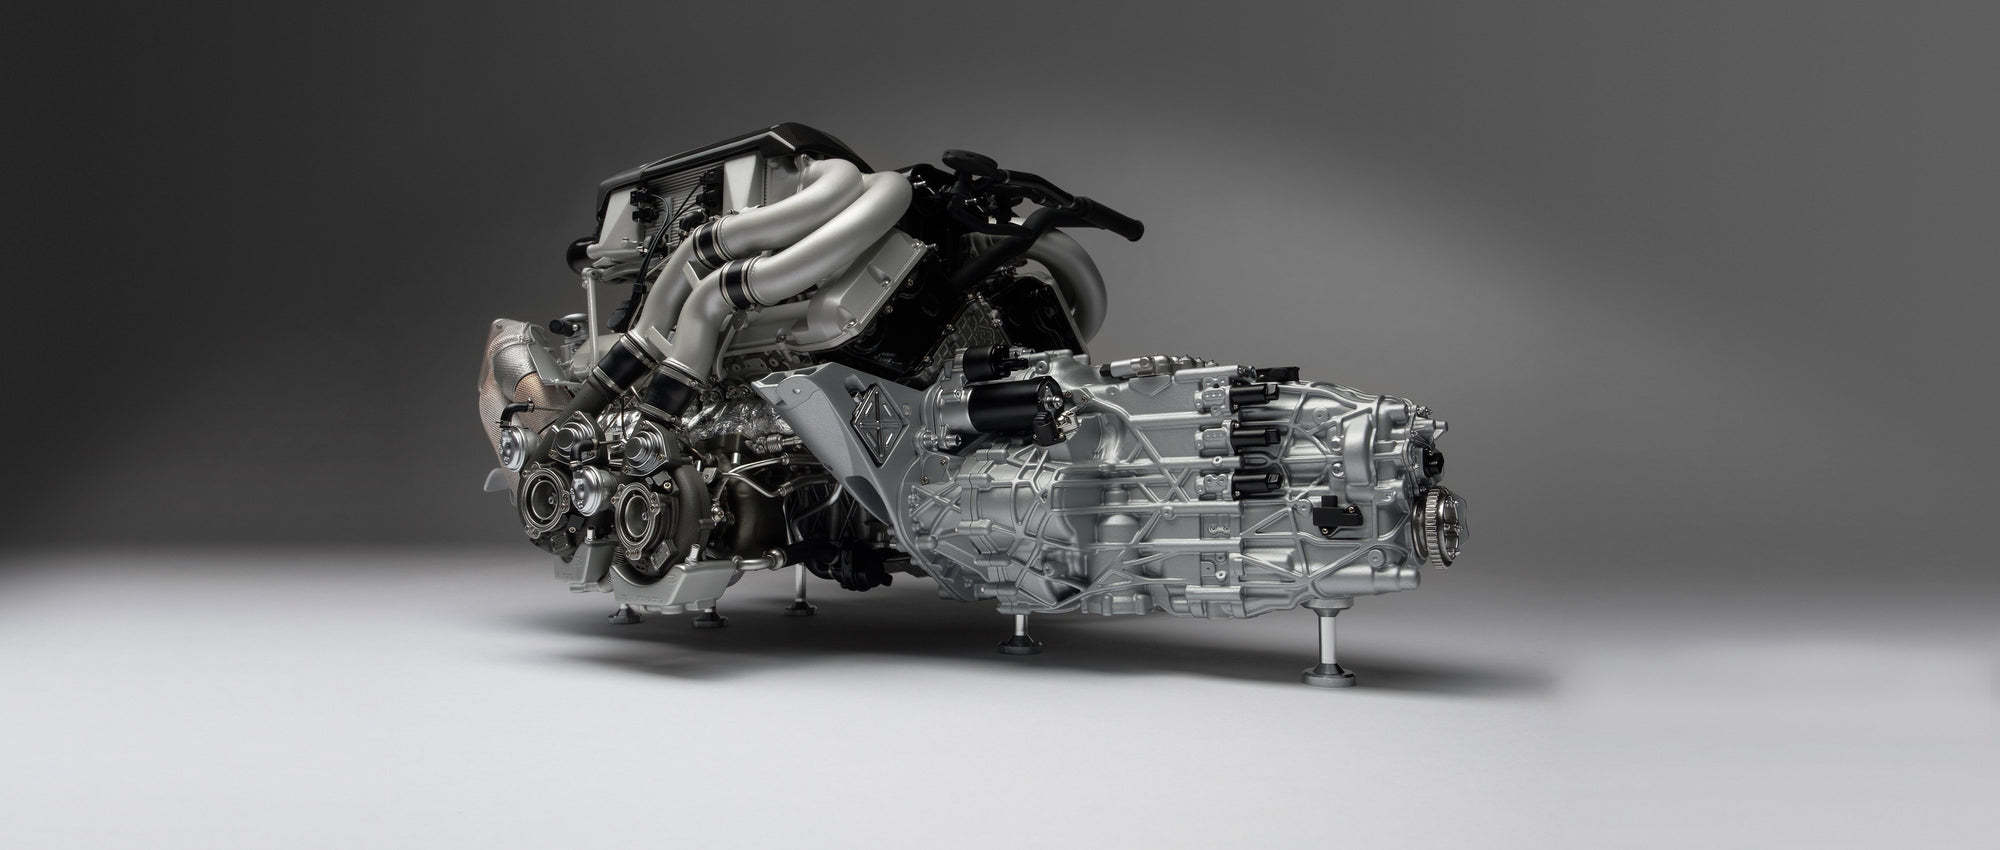 Motor y Caja de Cambios del Bugatti Chiron